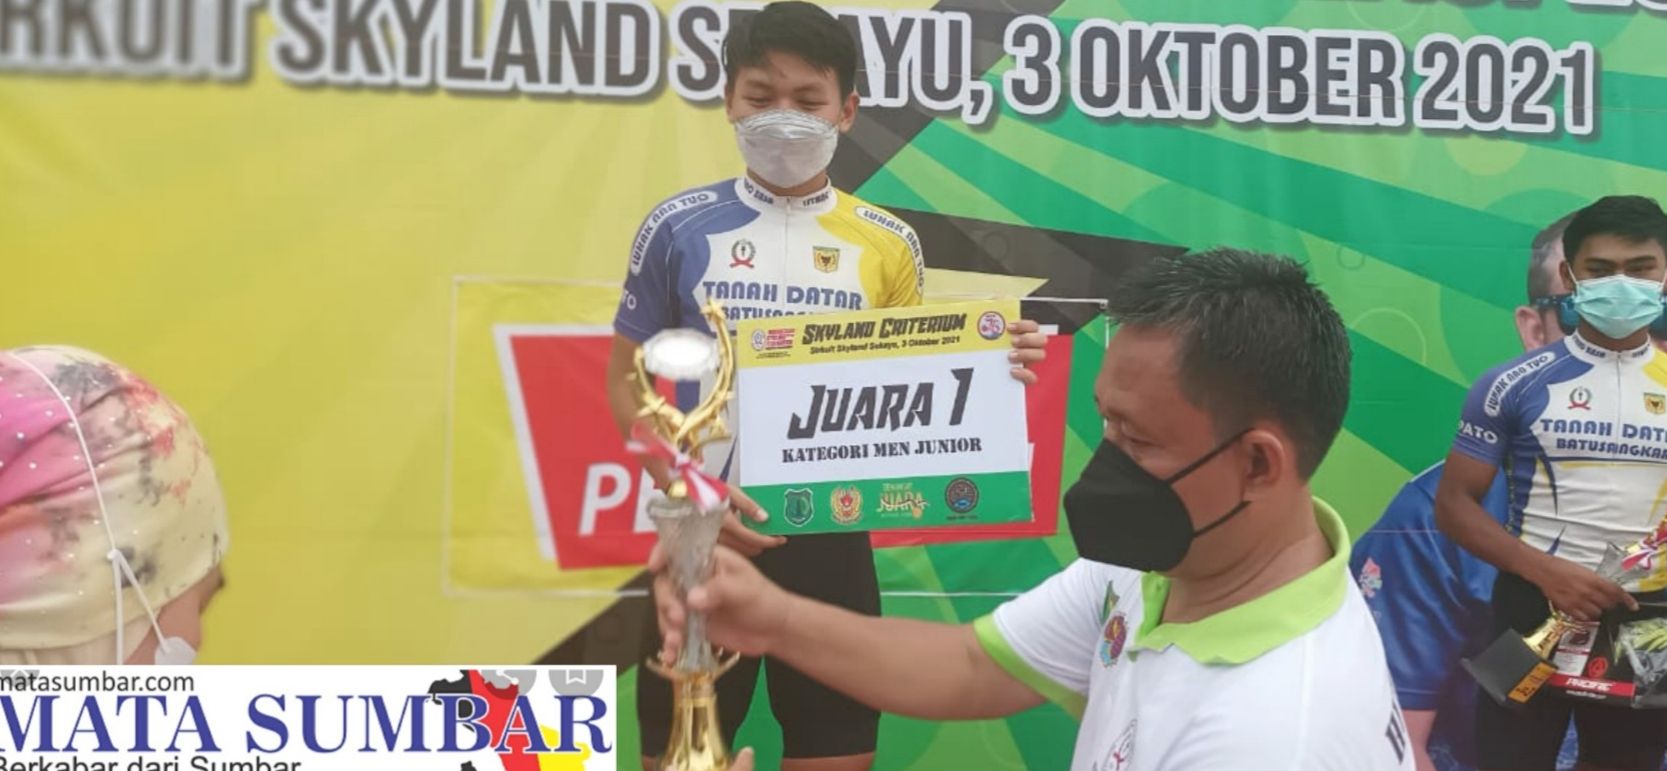 Sepeda Buatan Pasific : Atlit ISSI Tanah Datar Juarai Bupati Cup Musi Banyuasin